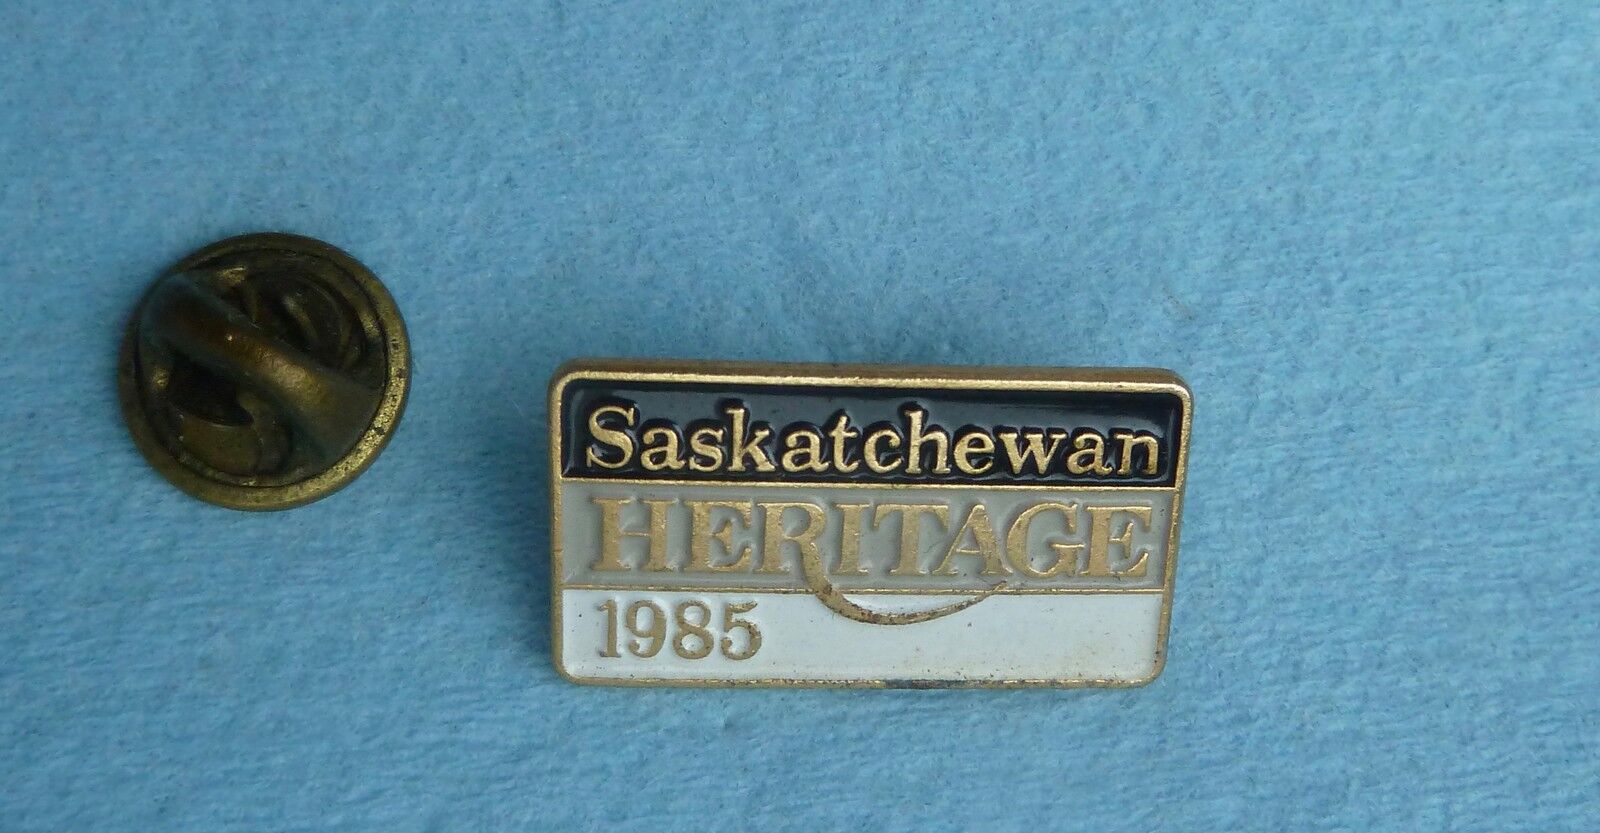 Saskatchewan Heritage 1985 Canada Lapel Pin